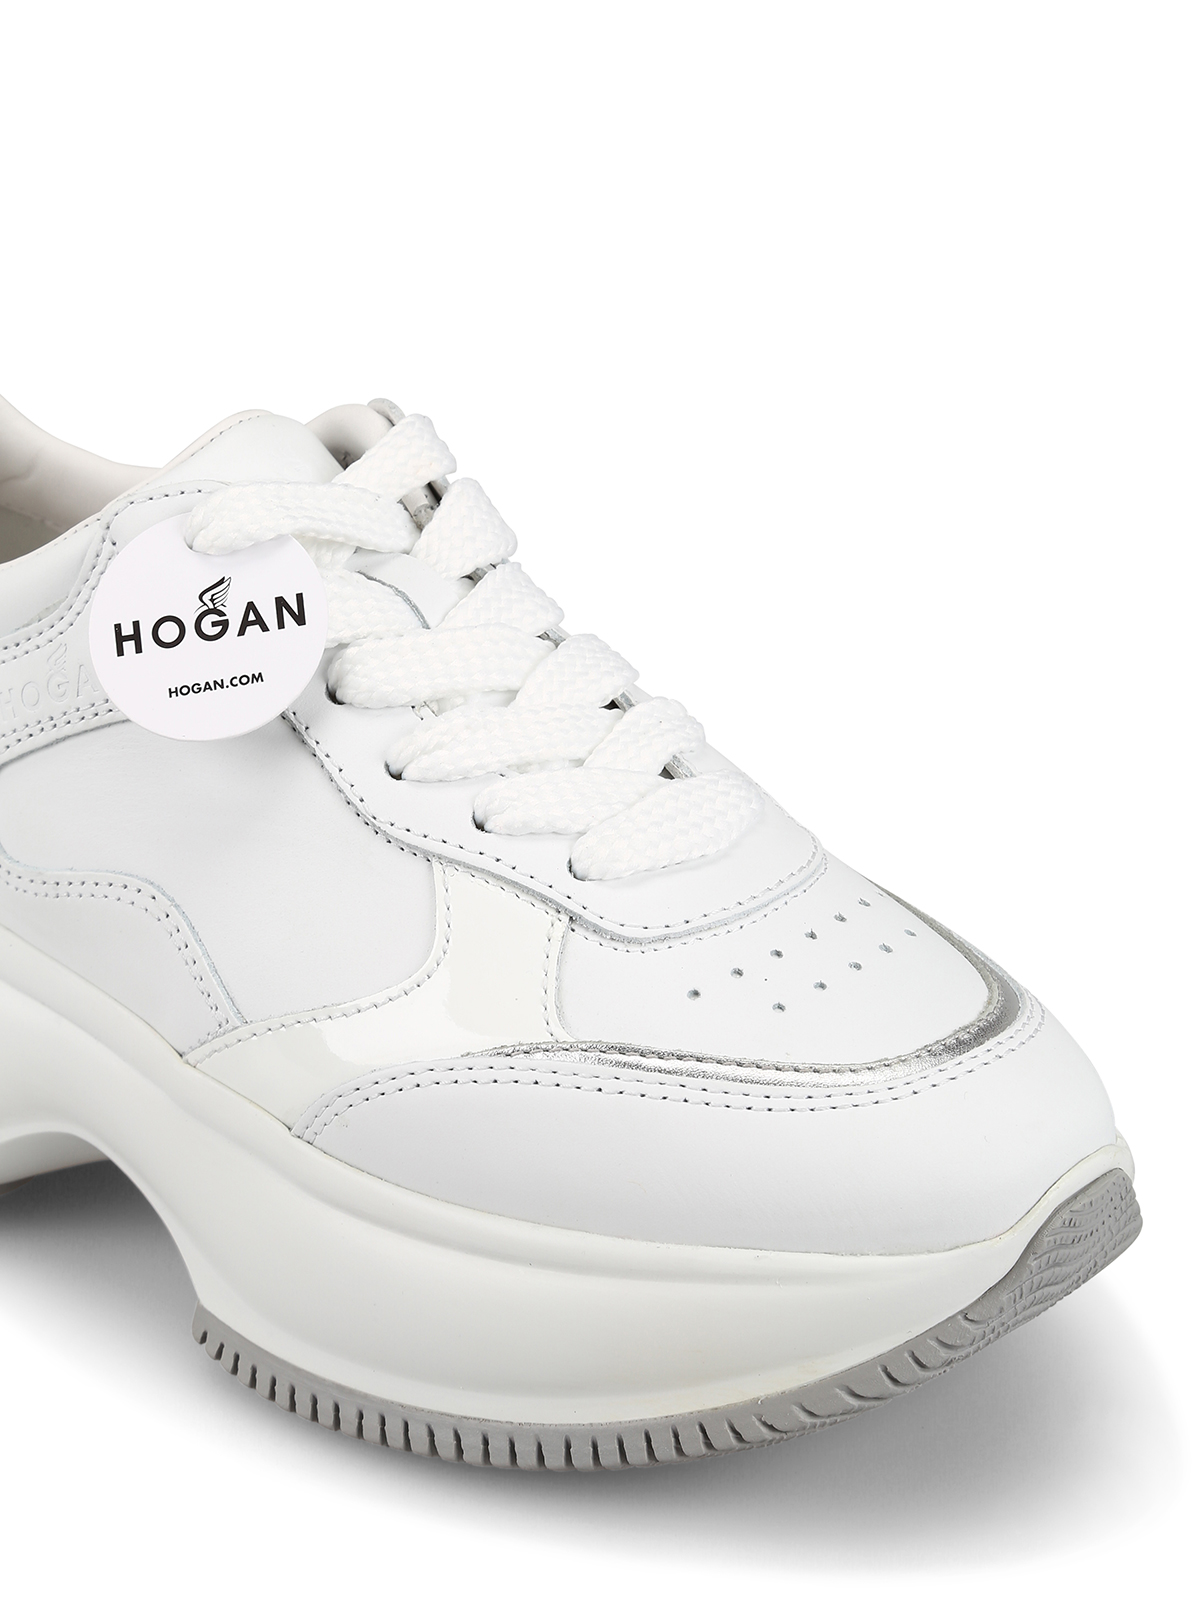 hogan brand sneakers